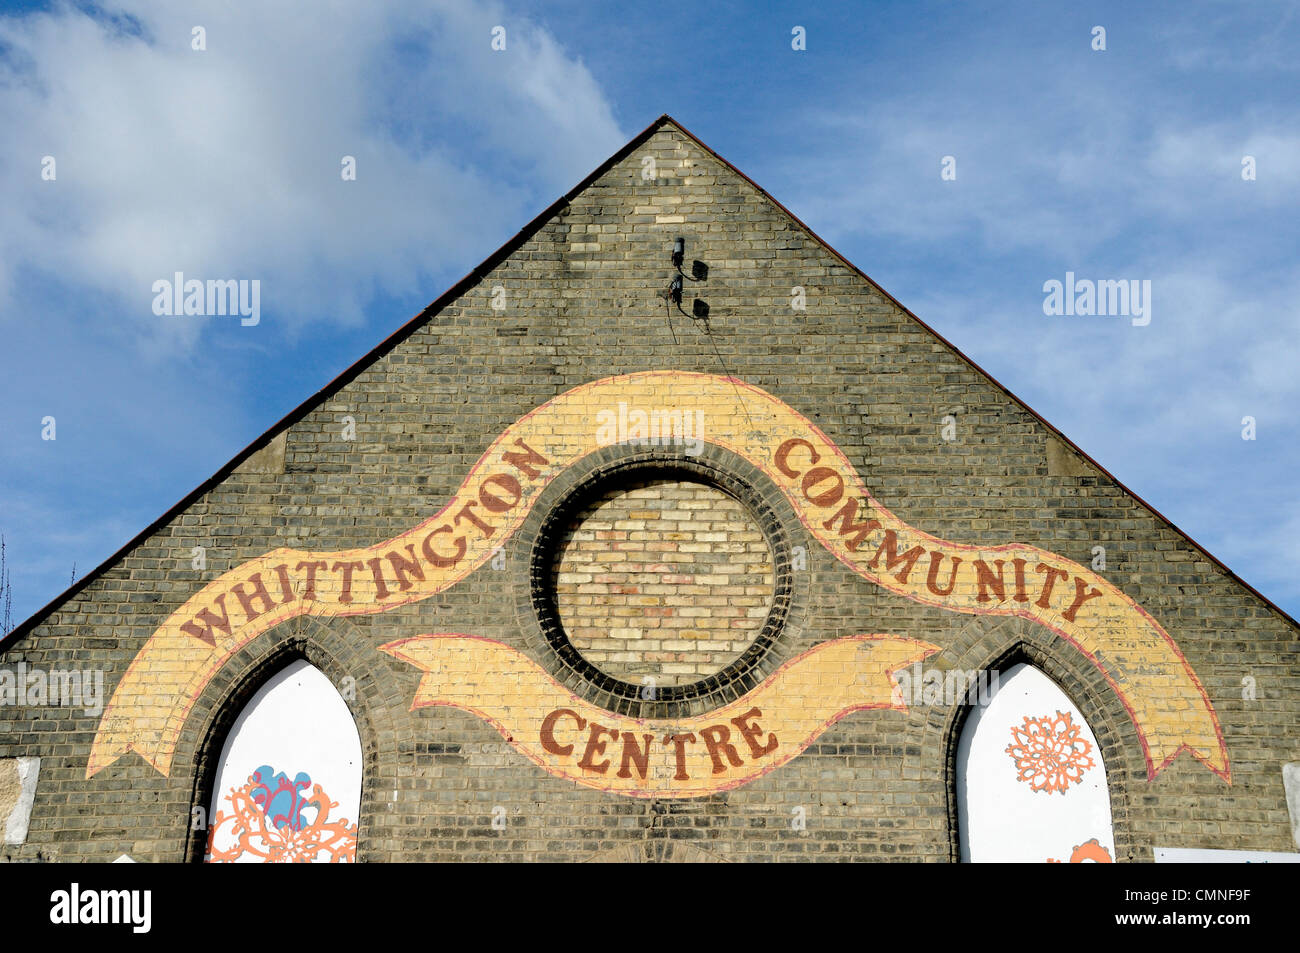 Whittington Community Centre painted on brick building, Whittington Park, Holloway, London UK Stock Photo